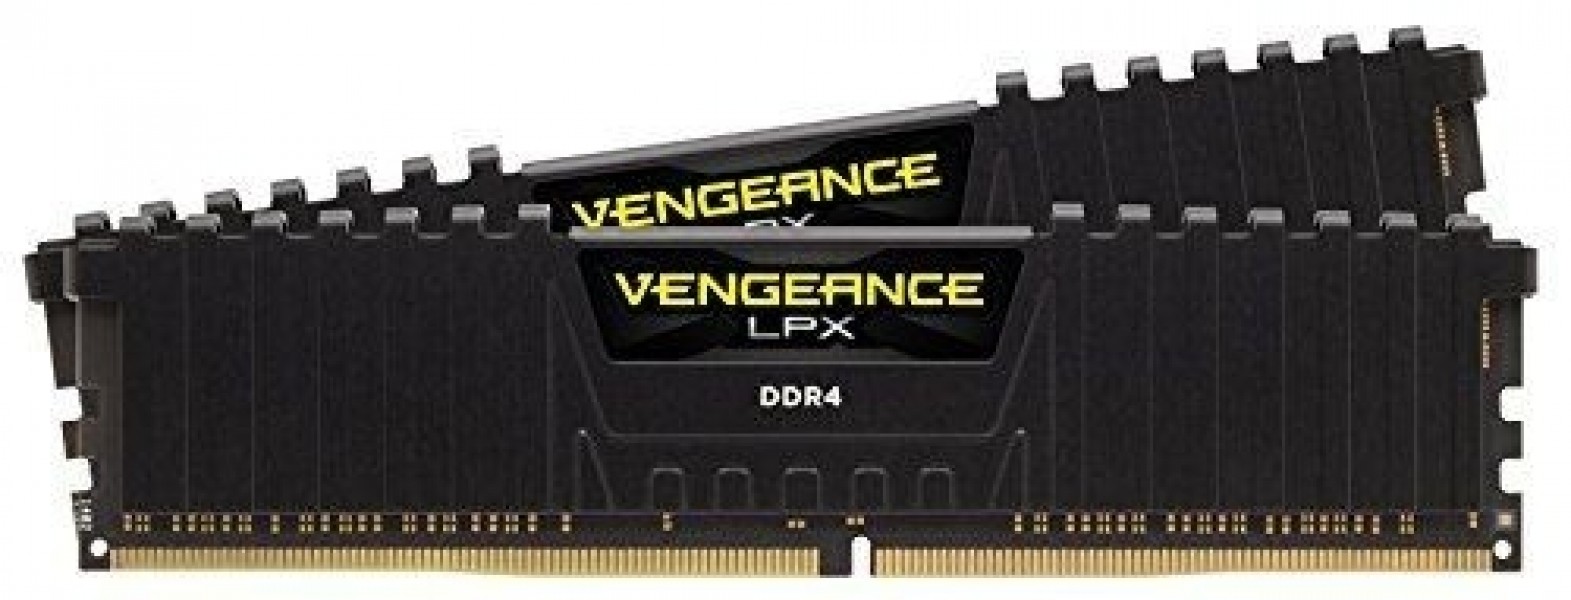 Corsair Vengeance LPX 16GB 2400MHz DDR4 CL14 KIT OF 2 CMK16GX4M2A2400C14